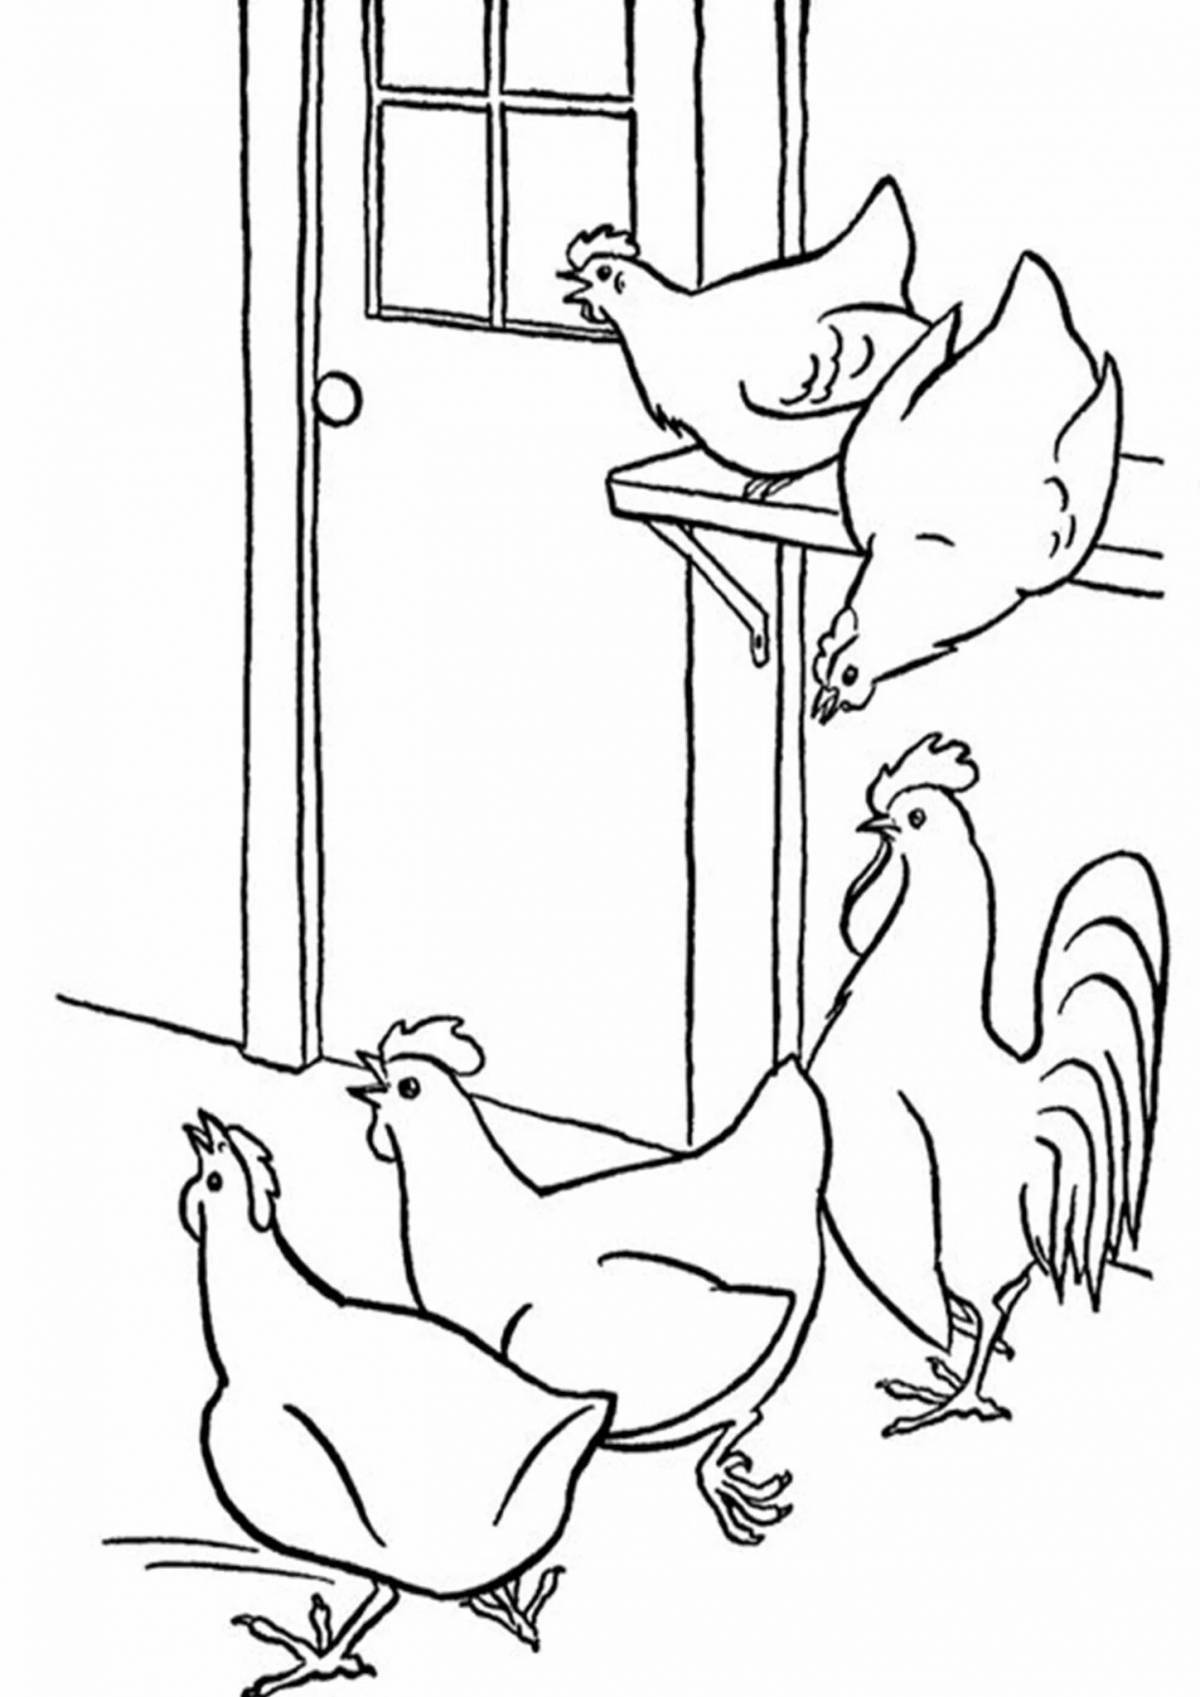 Coloring page happy chicken coop